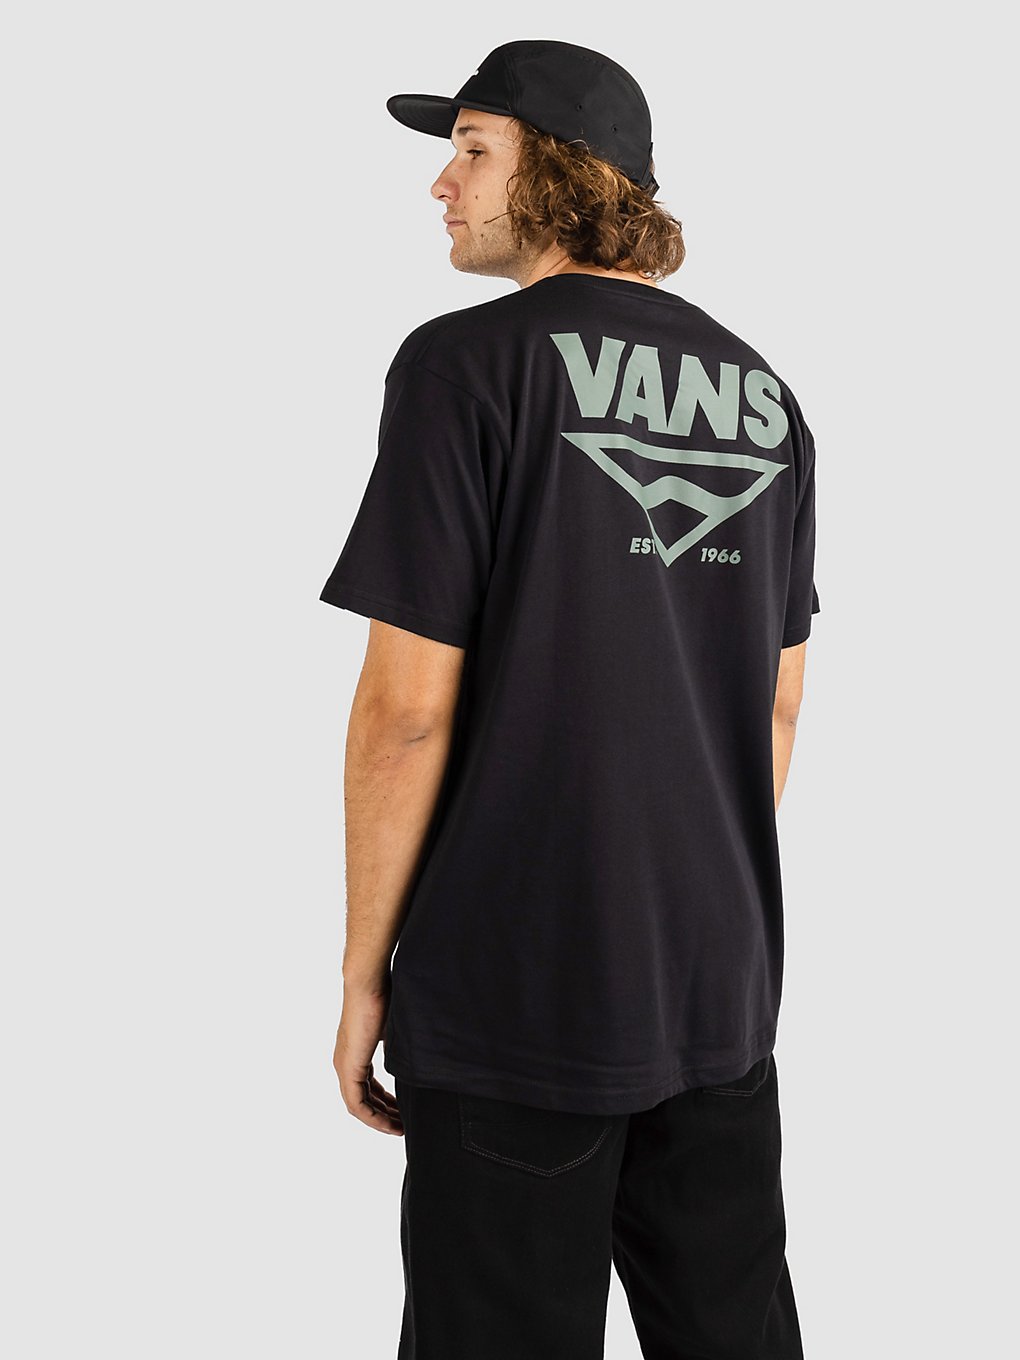 Vans Shaper Type T-Shirt black kaufen